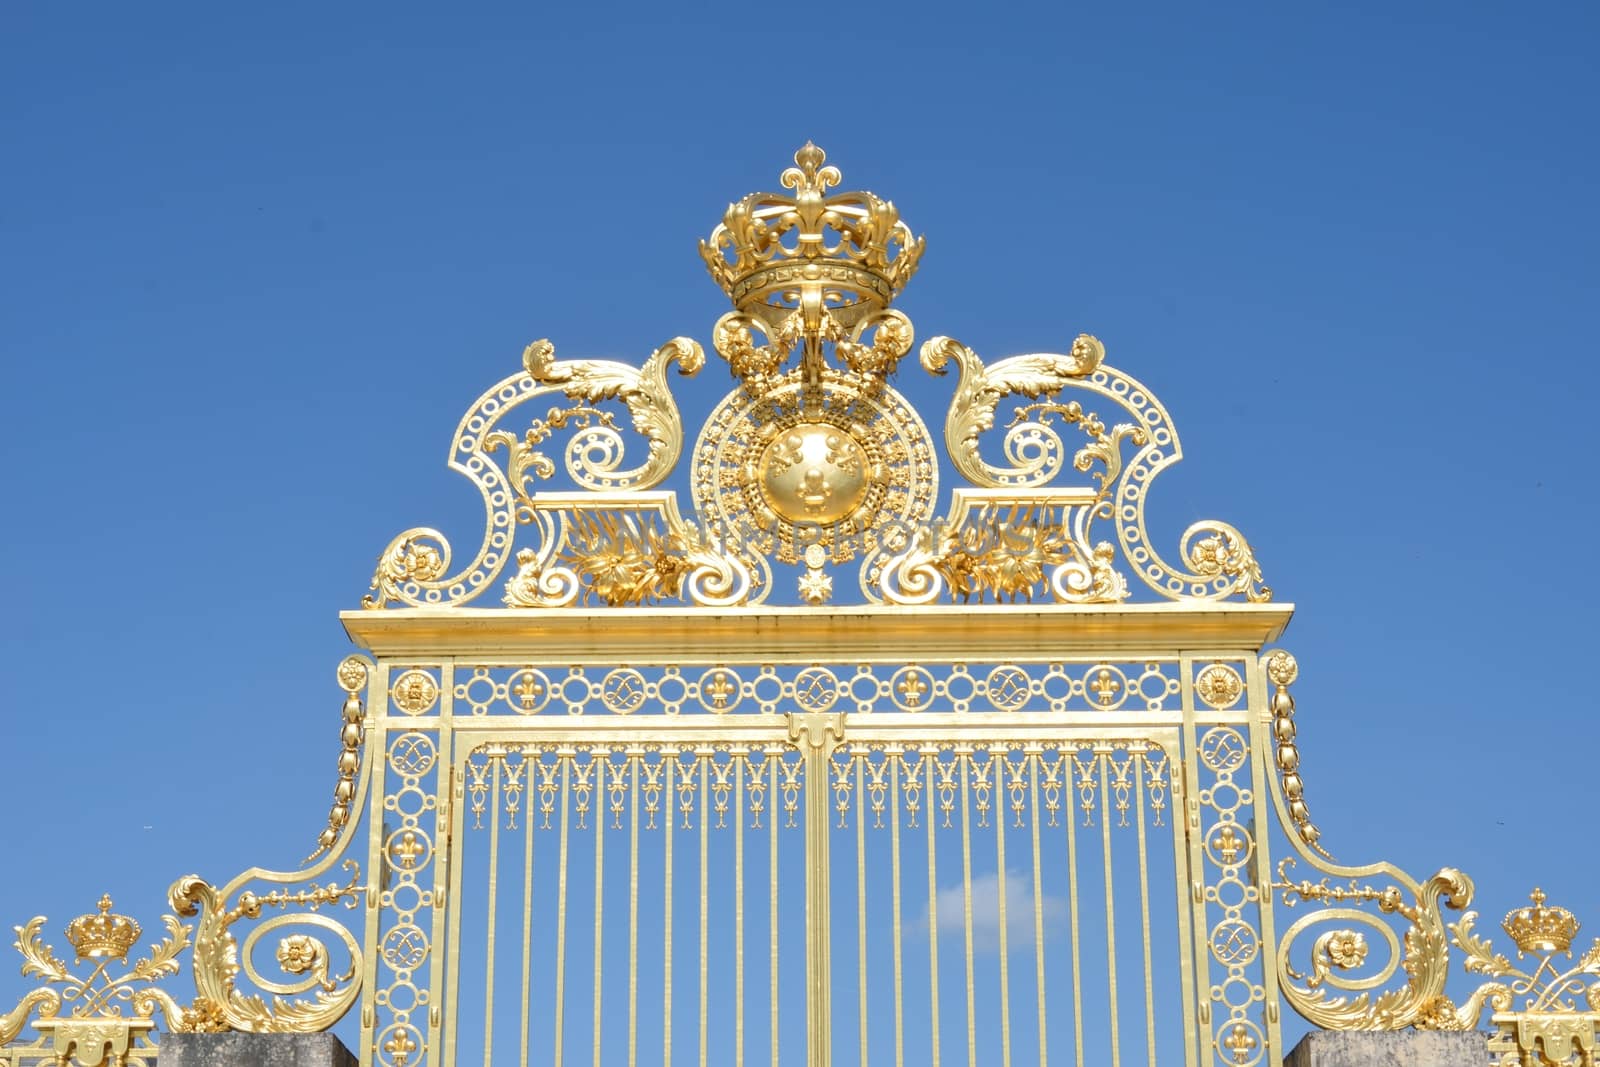 Golden palace gates